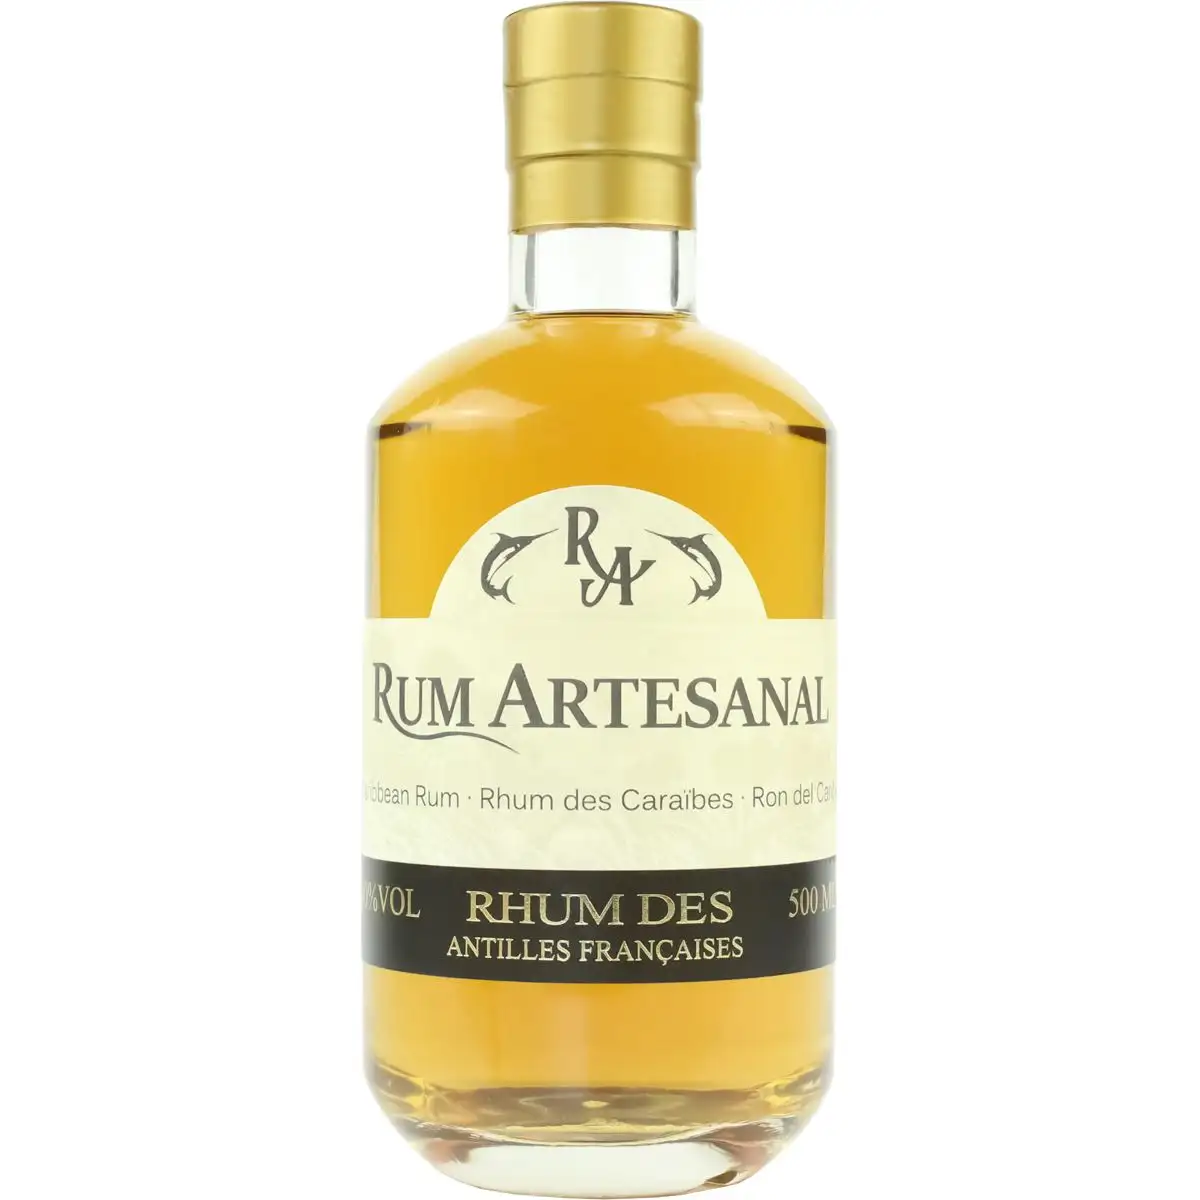 Image of the front of the bottle of the rum Rum Artesanal Rhum des Antilles Françaises